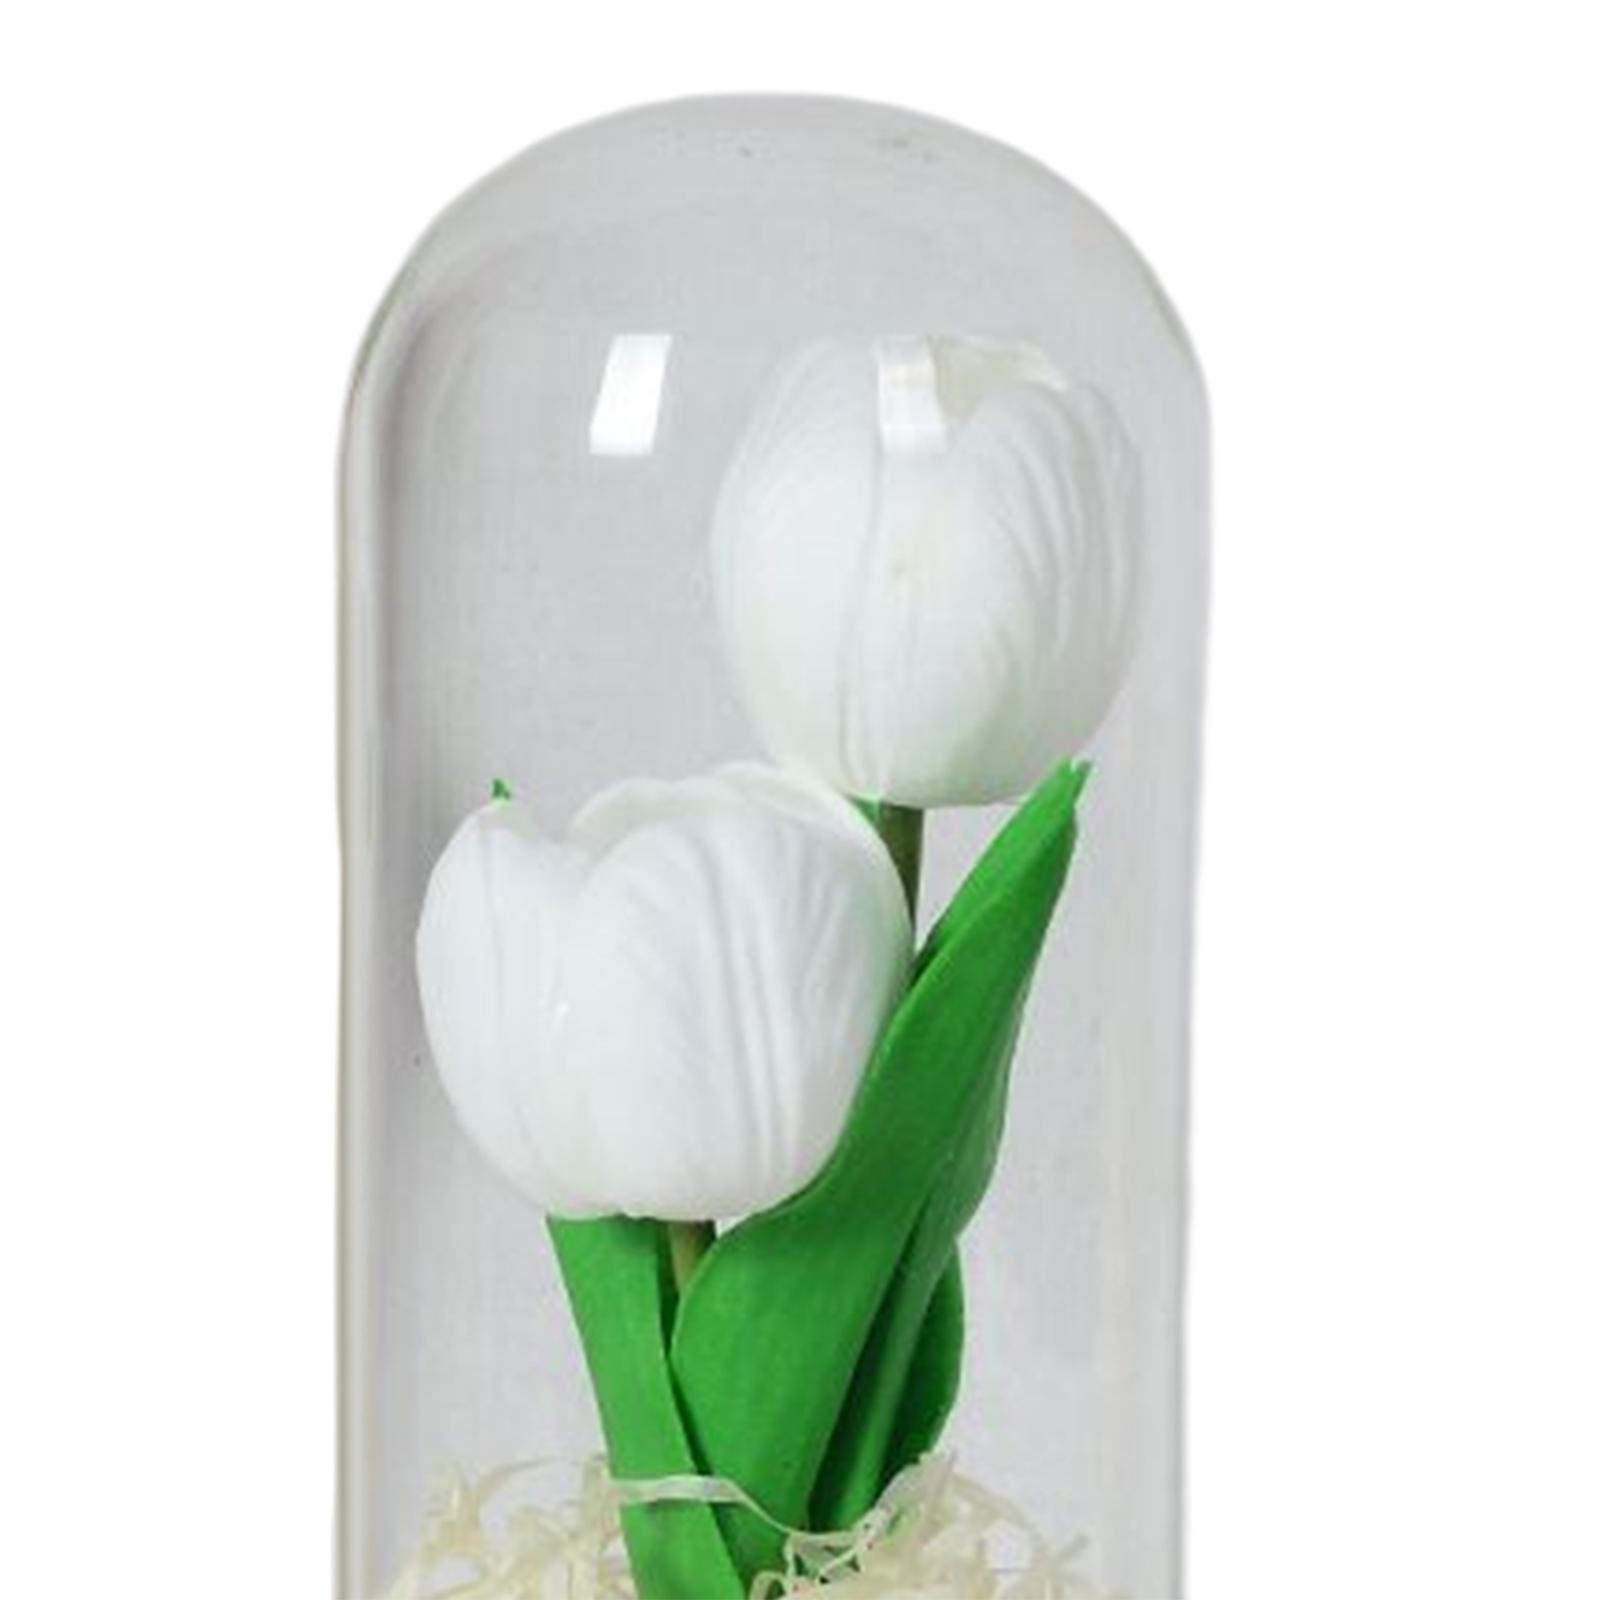 Faux Flower LED Light Flowers Dome Scenery Supplies Centerpiece Romantic White